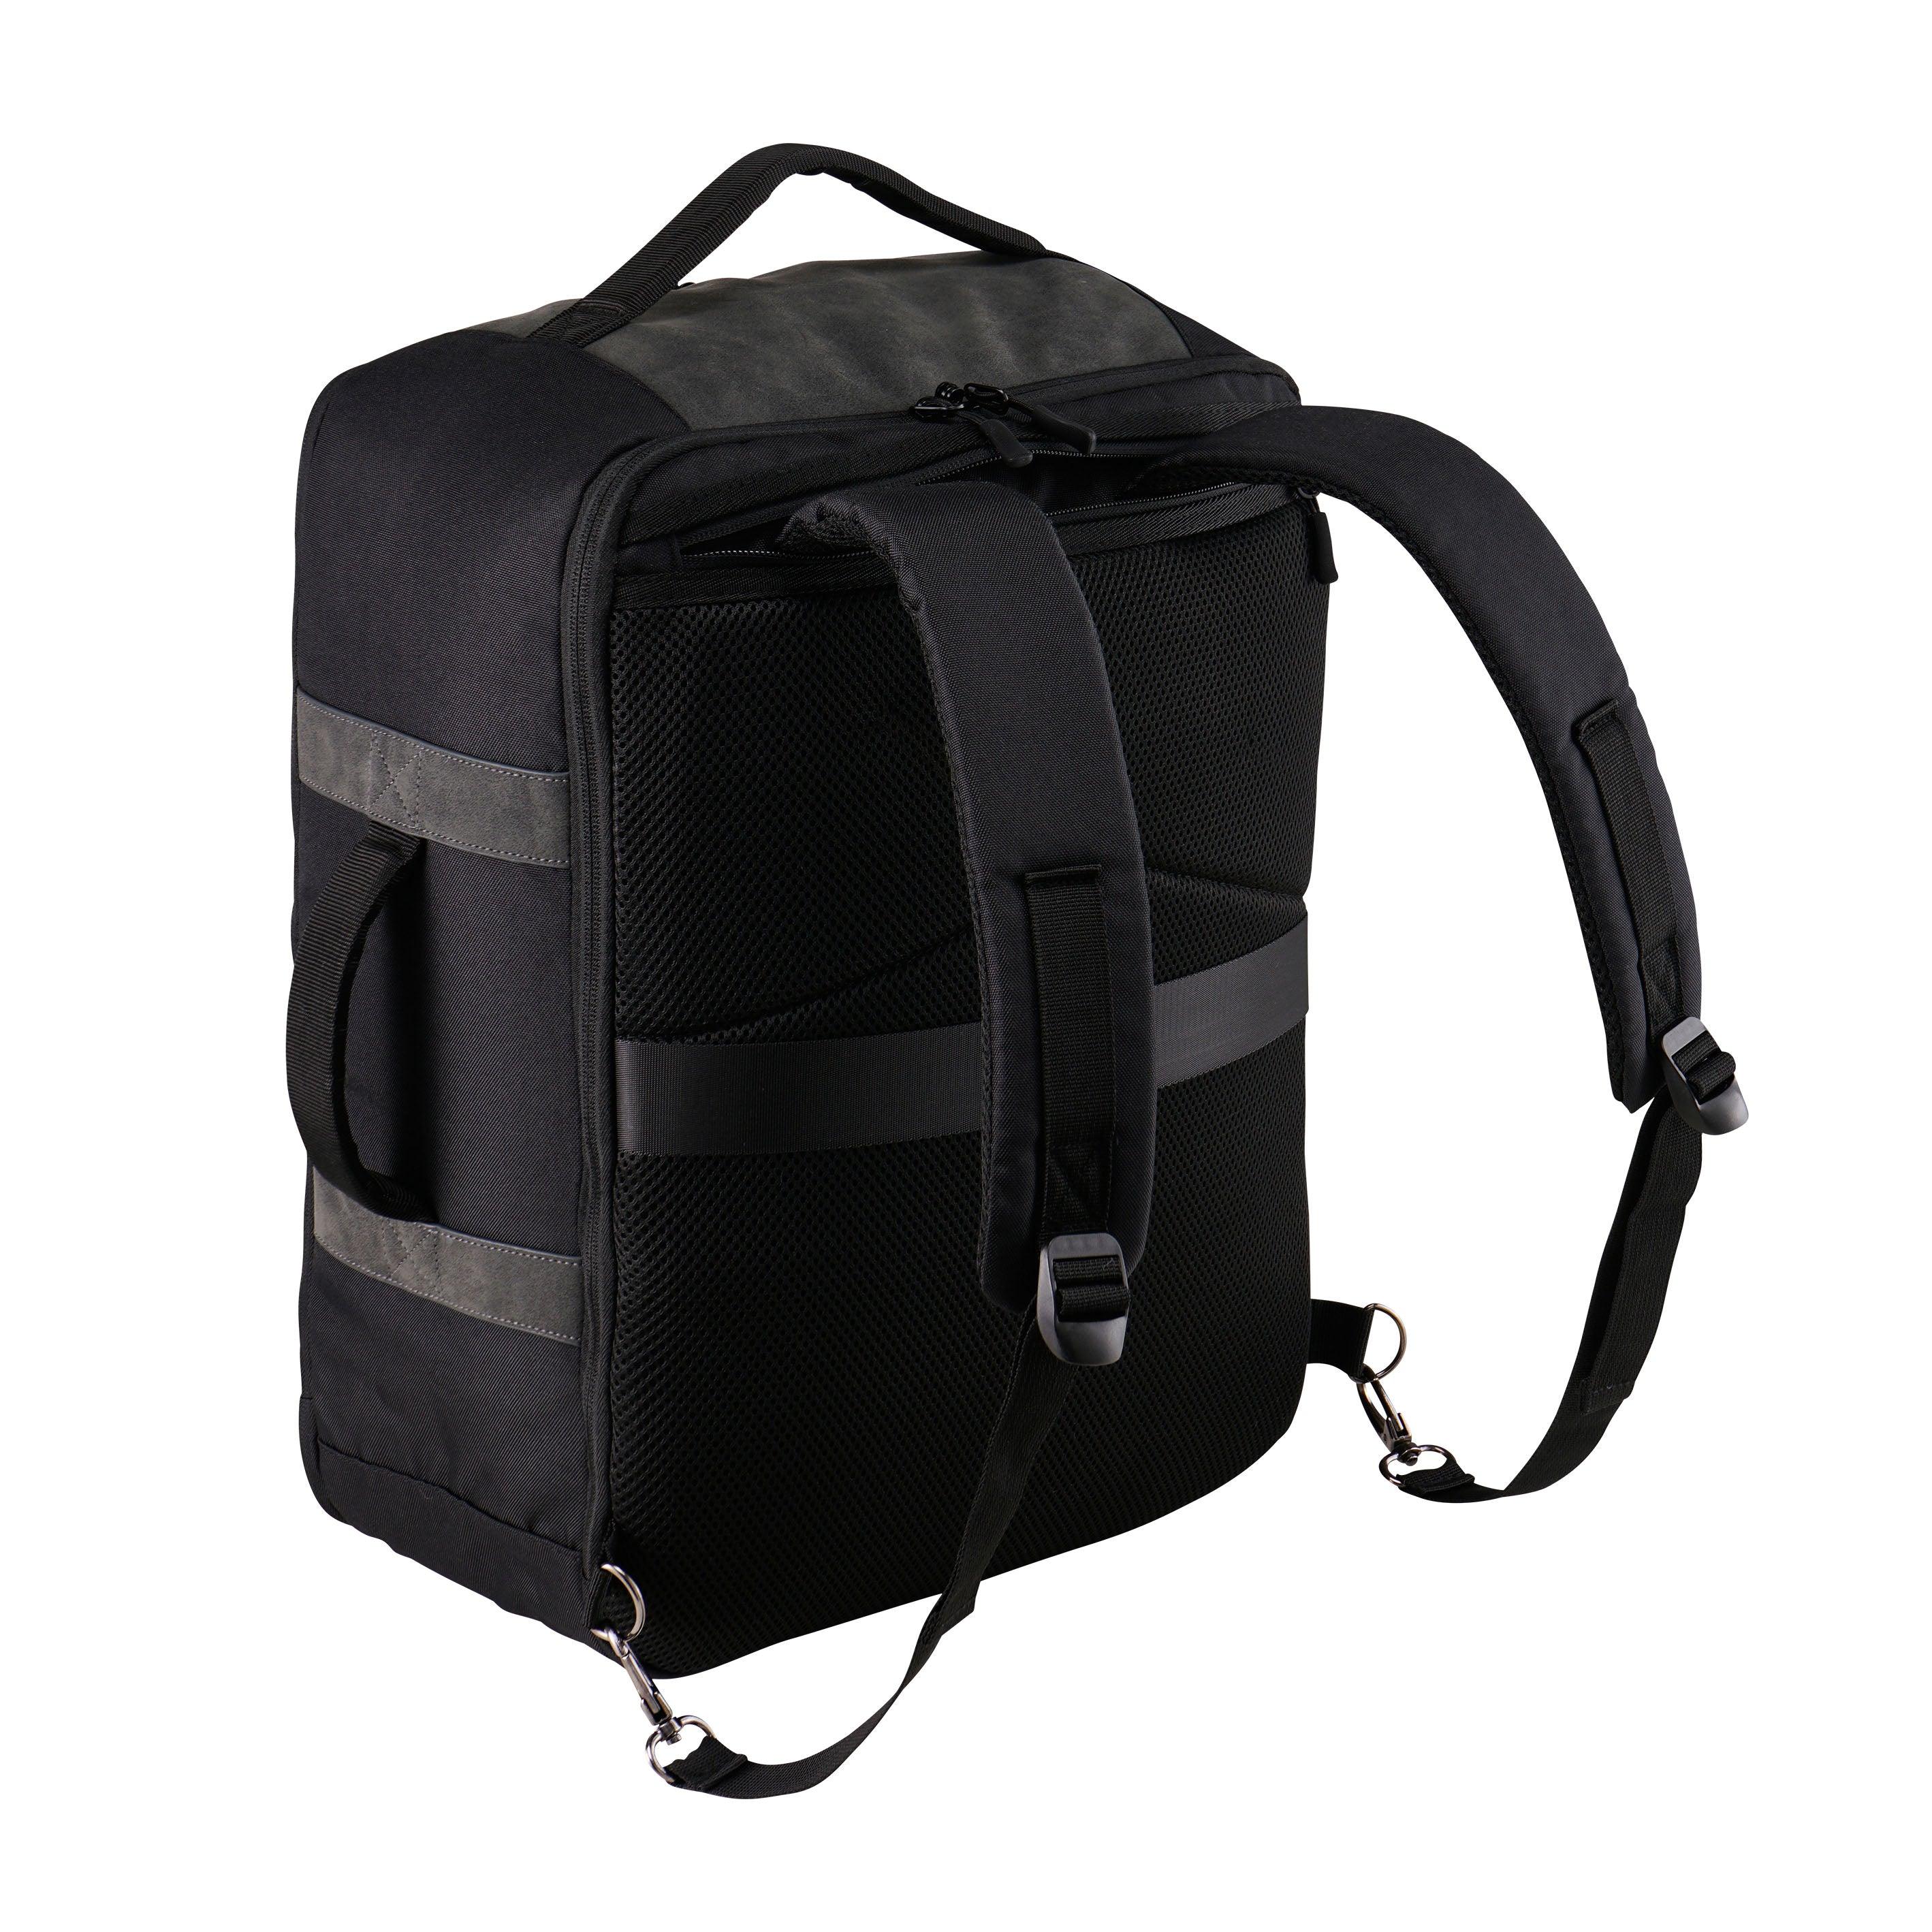 Manhattan Backpack 30L - 45x36x20cm – Cabin Max